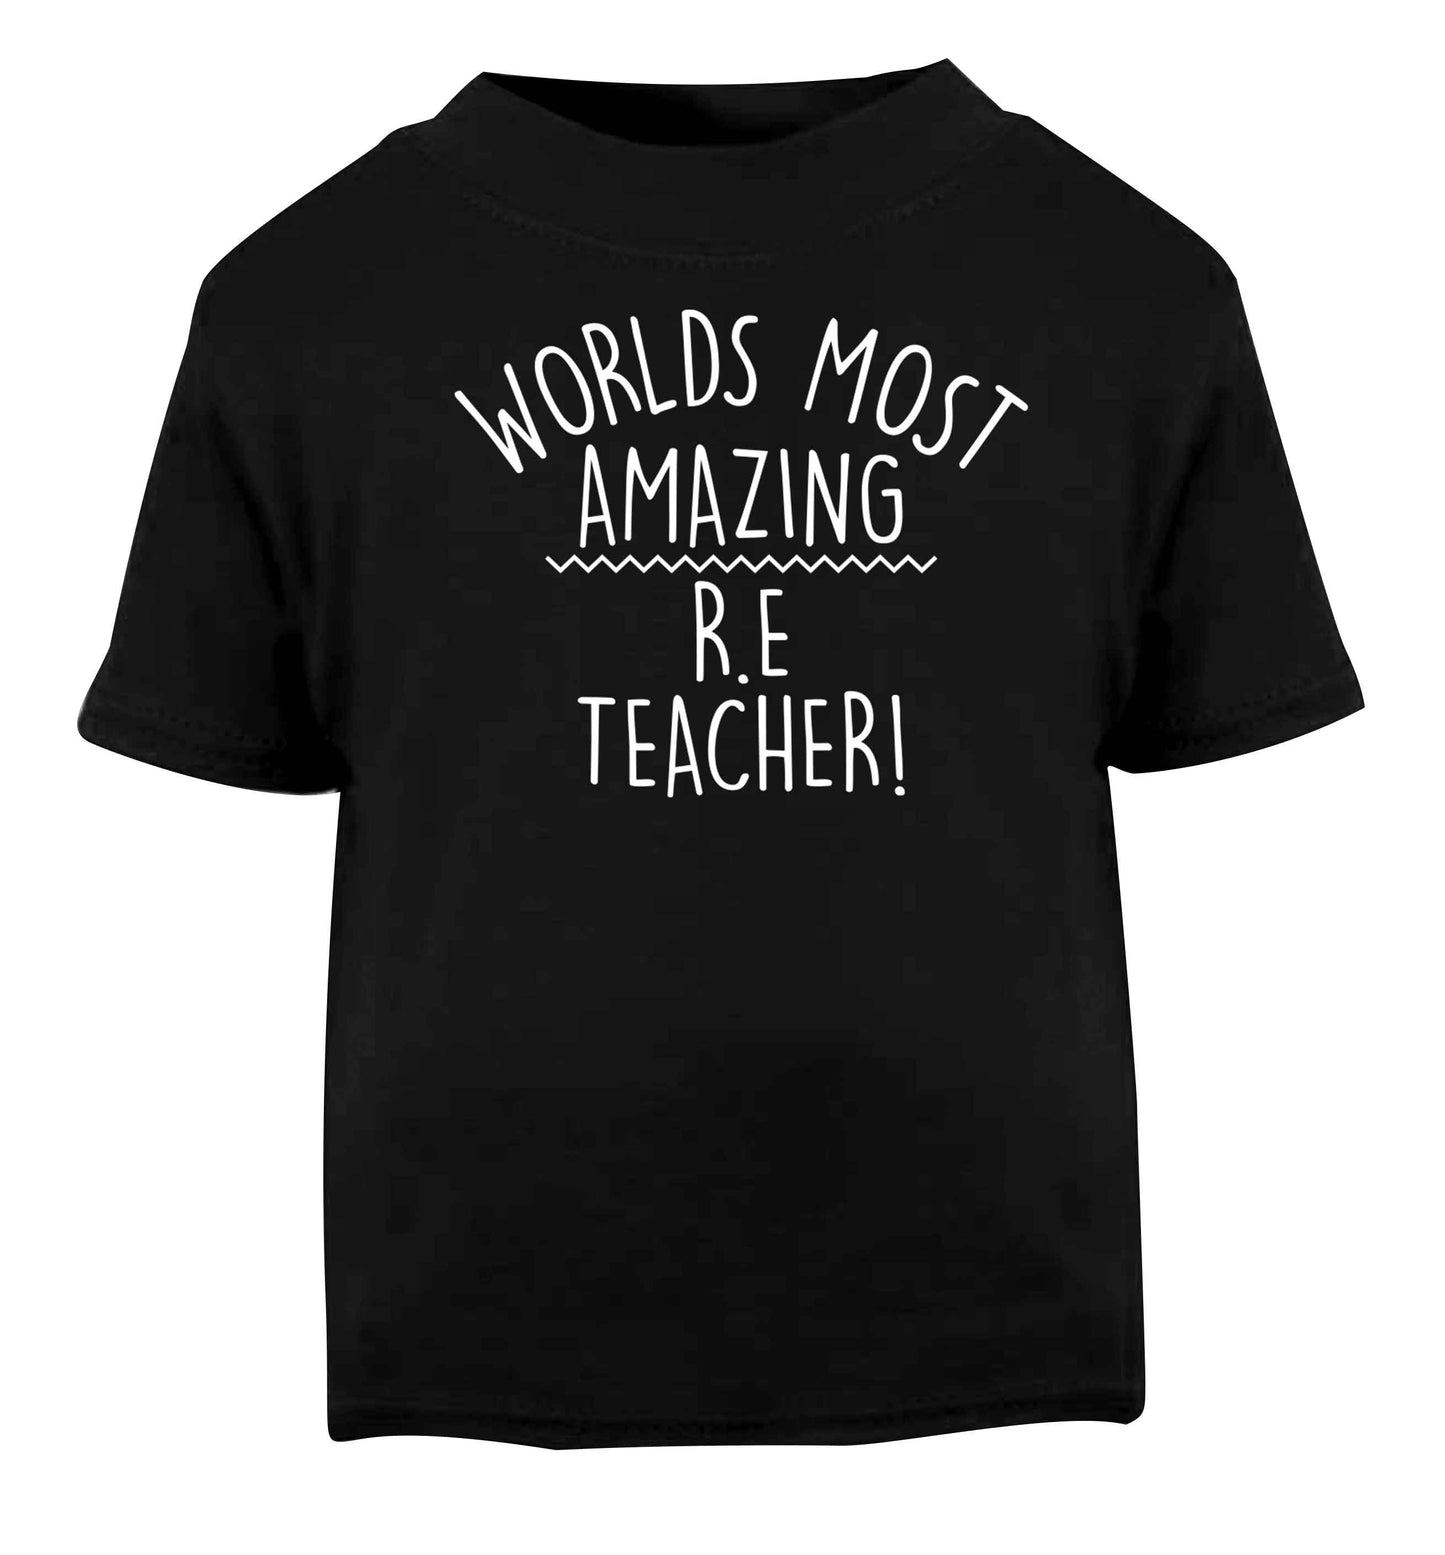 Worlds most amazing R.E teacher Black baby toddler Tshirt 2 years